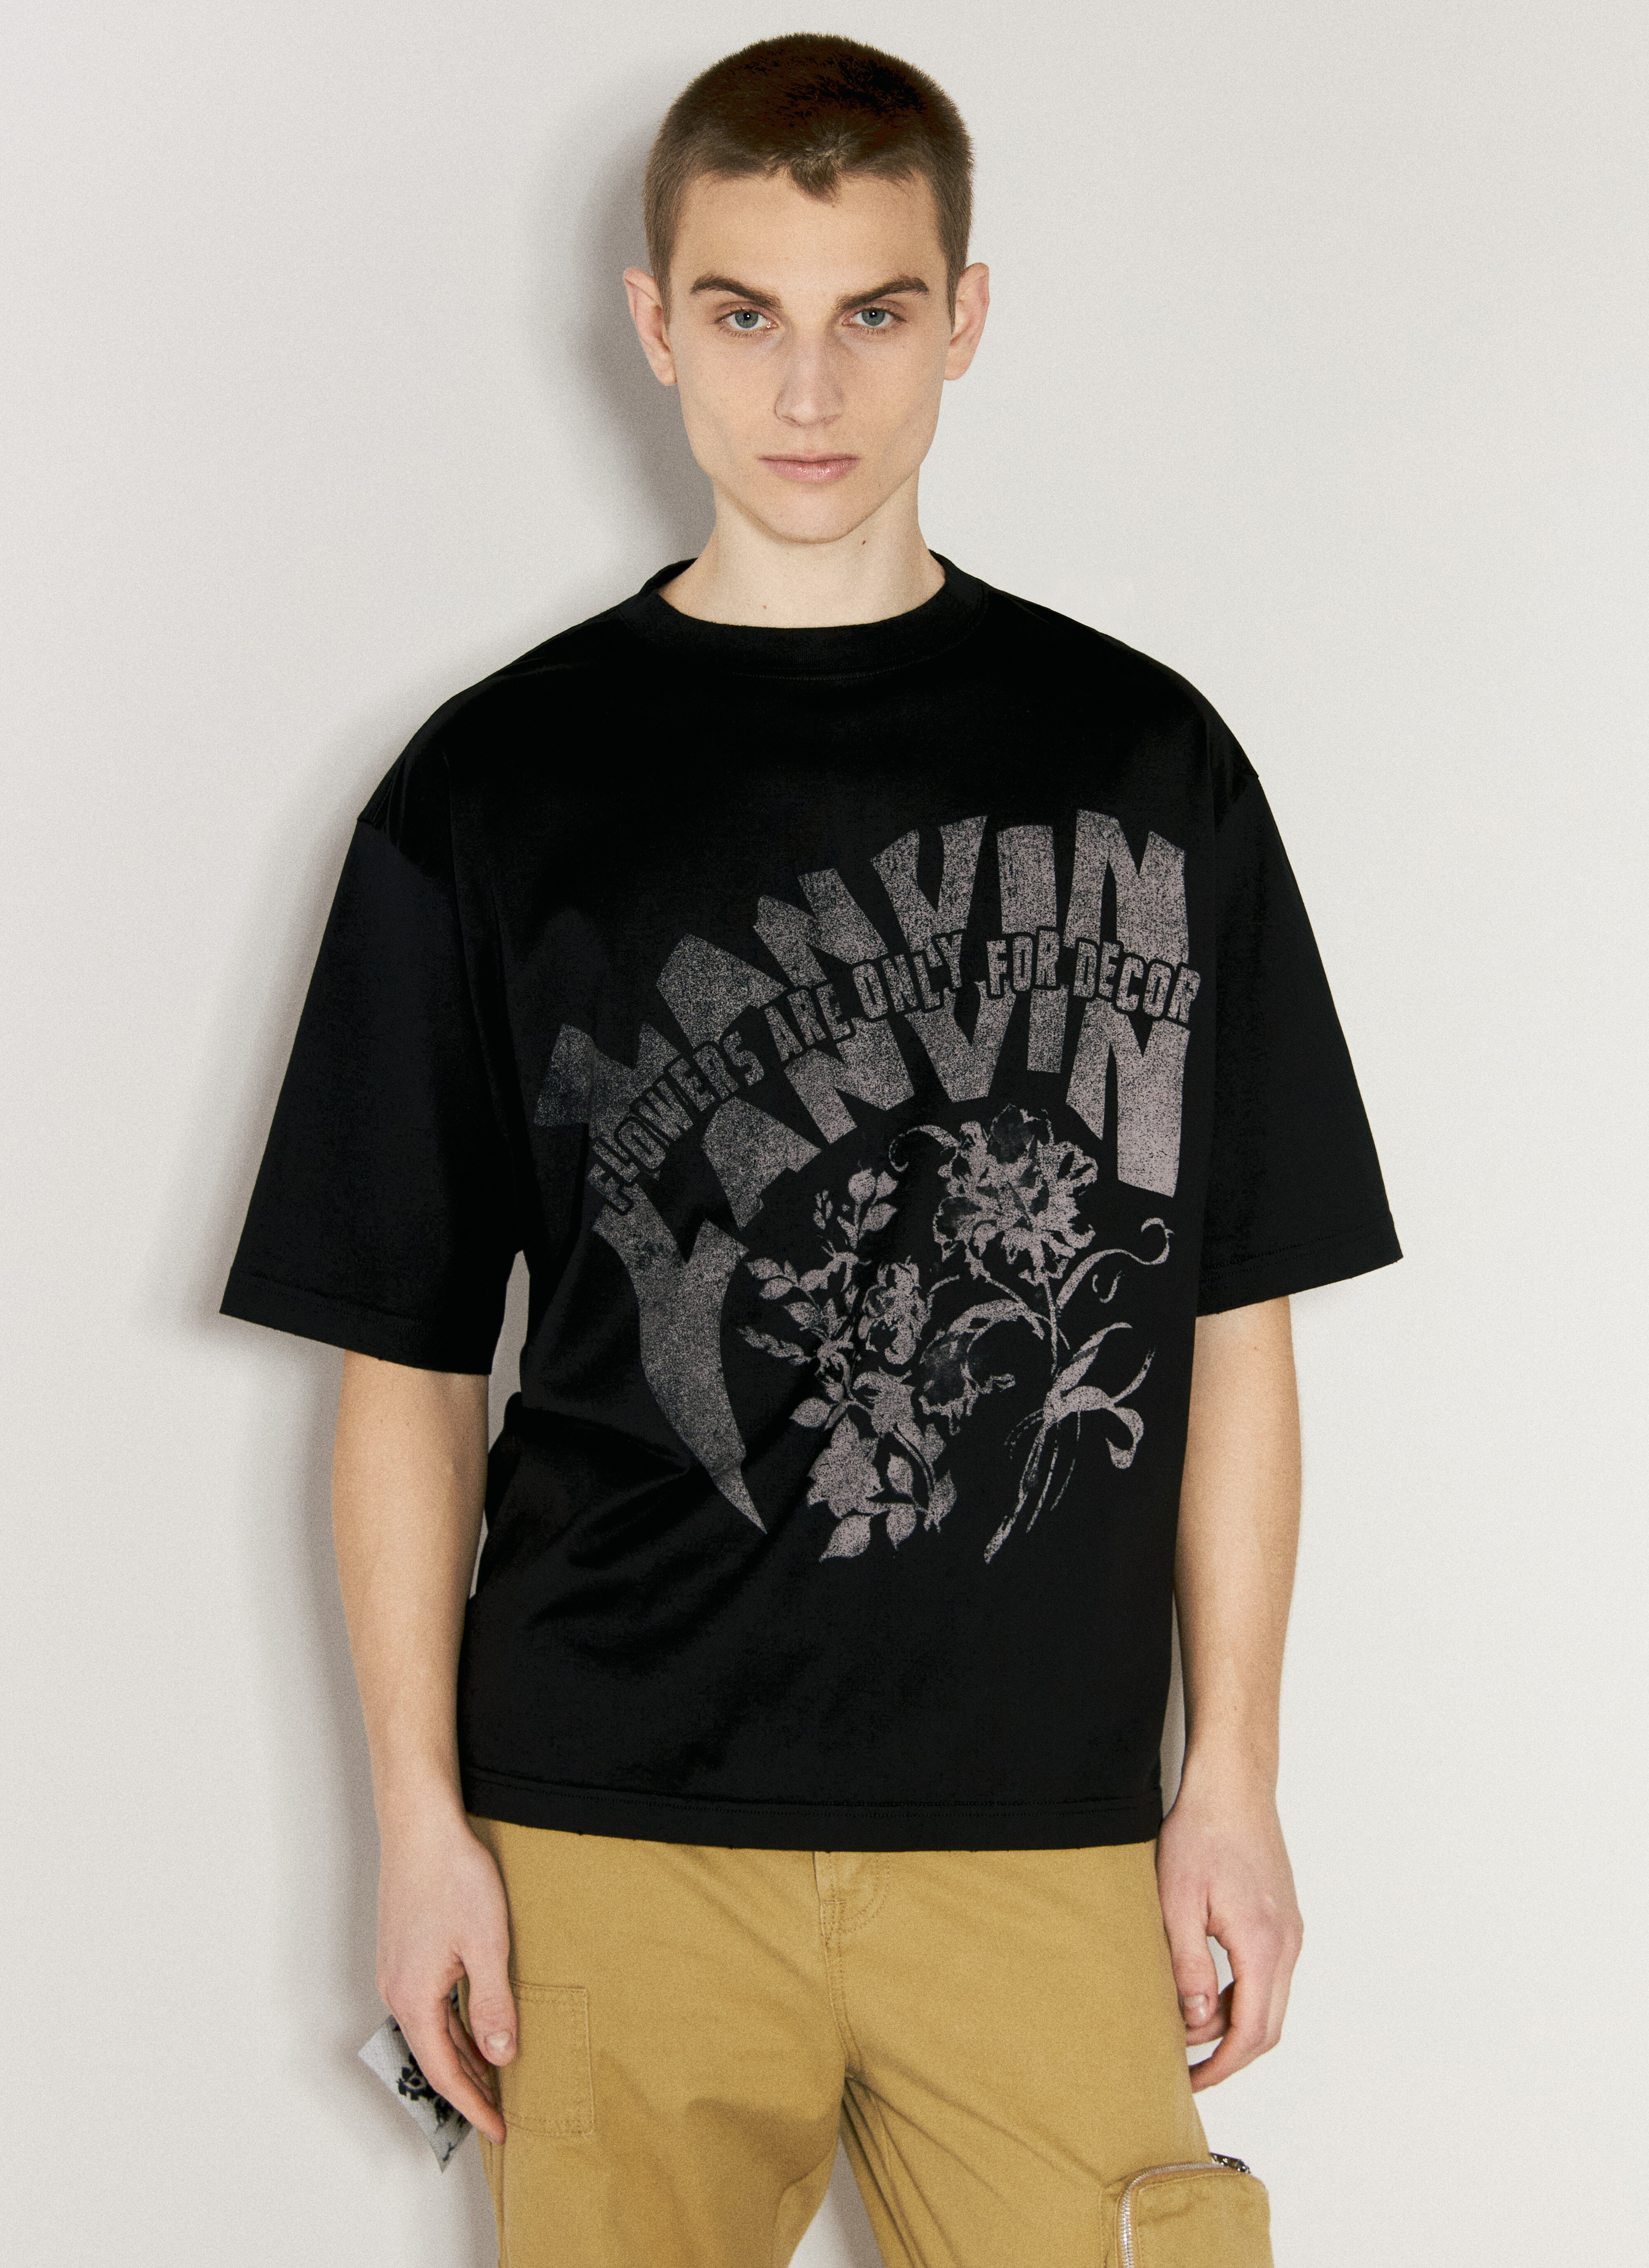 Lanvin x Future ロゴプリントTシャツ  イエロー lvf0157007